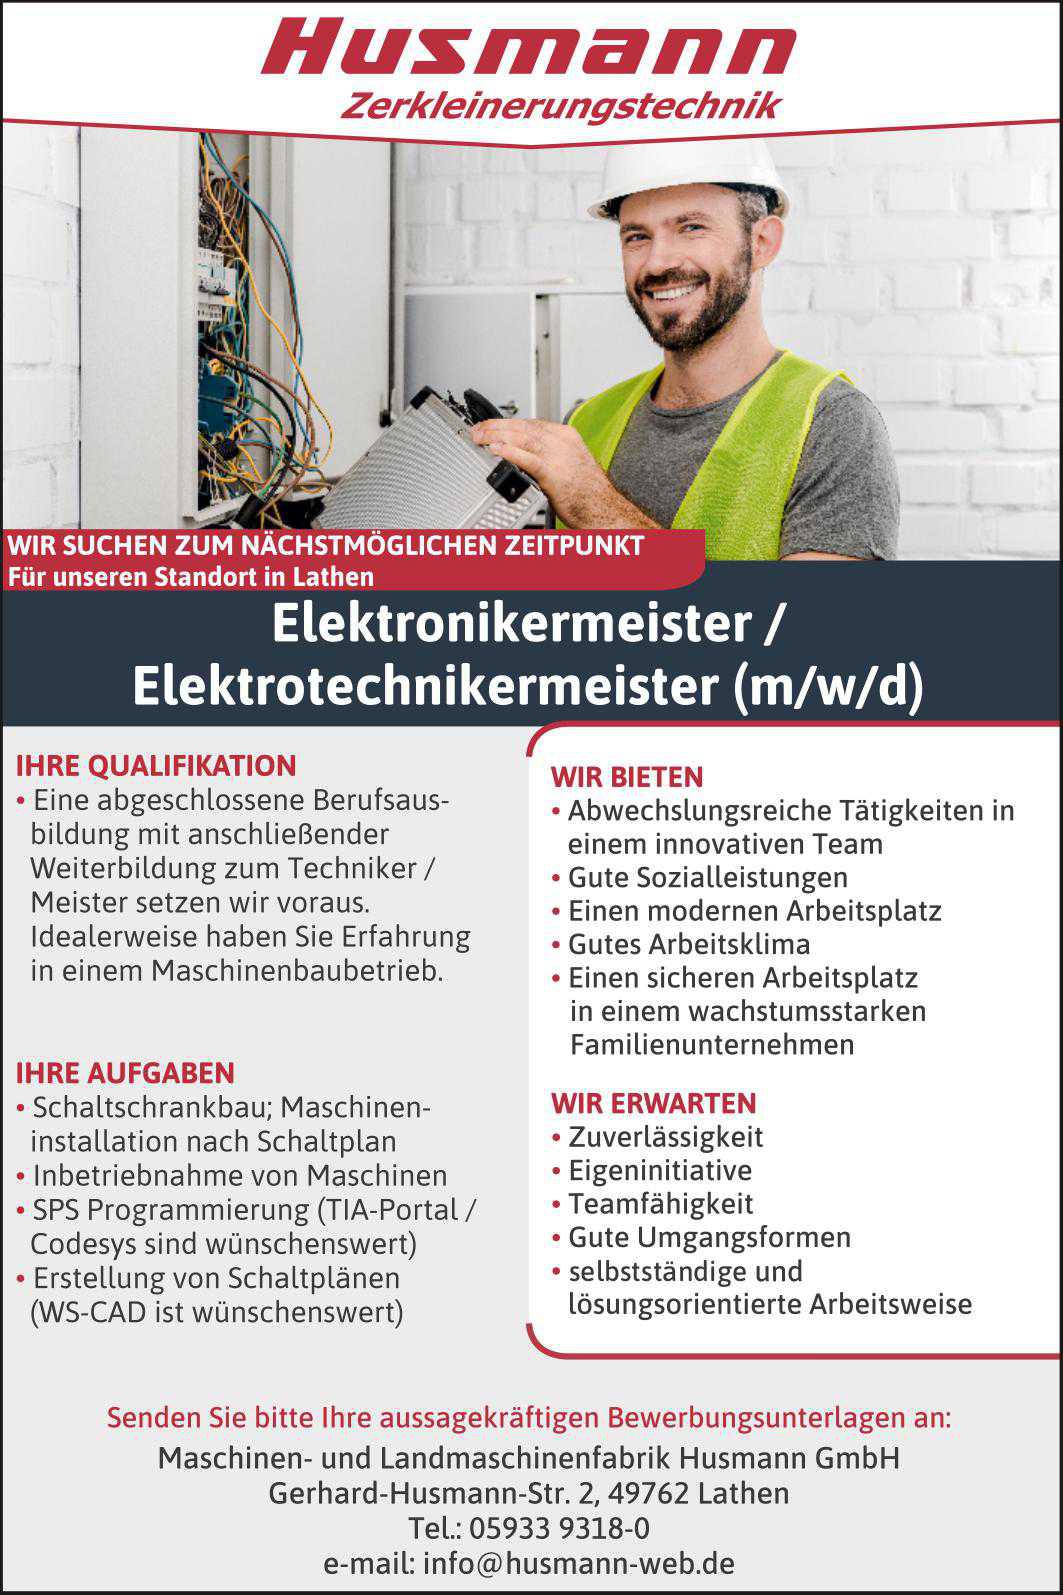 Elektronikermeister / Elektrotechnikermeister m/w/d